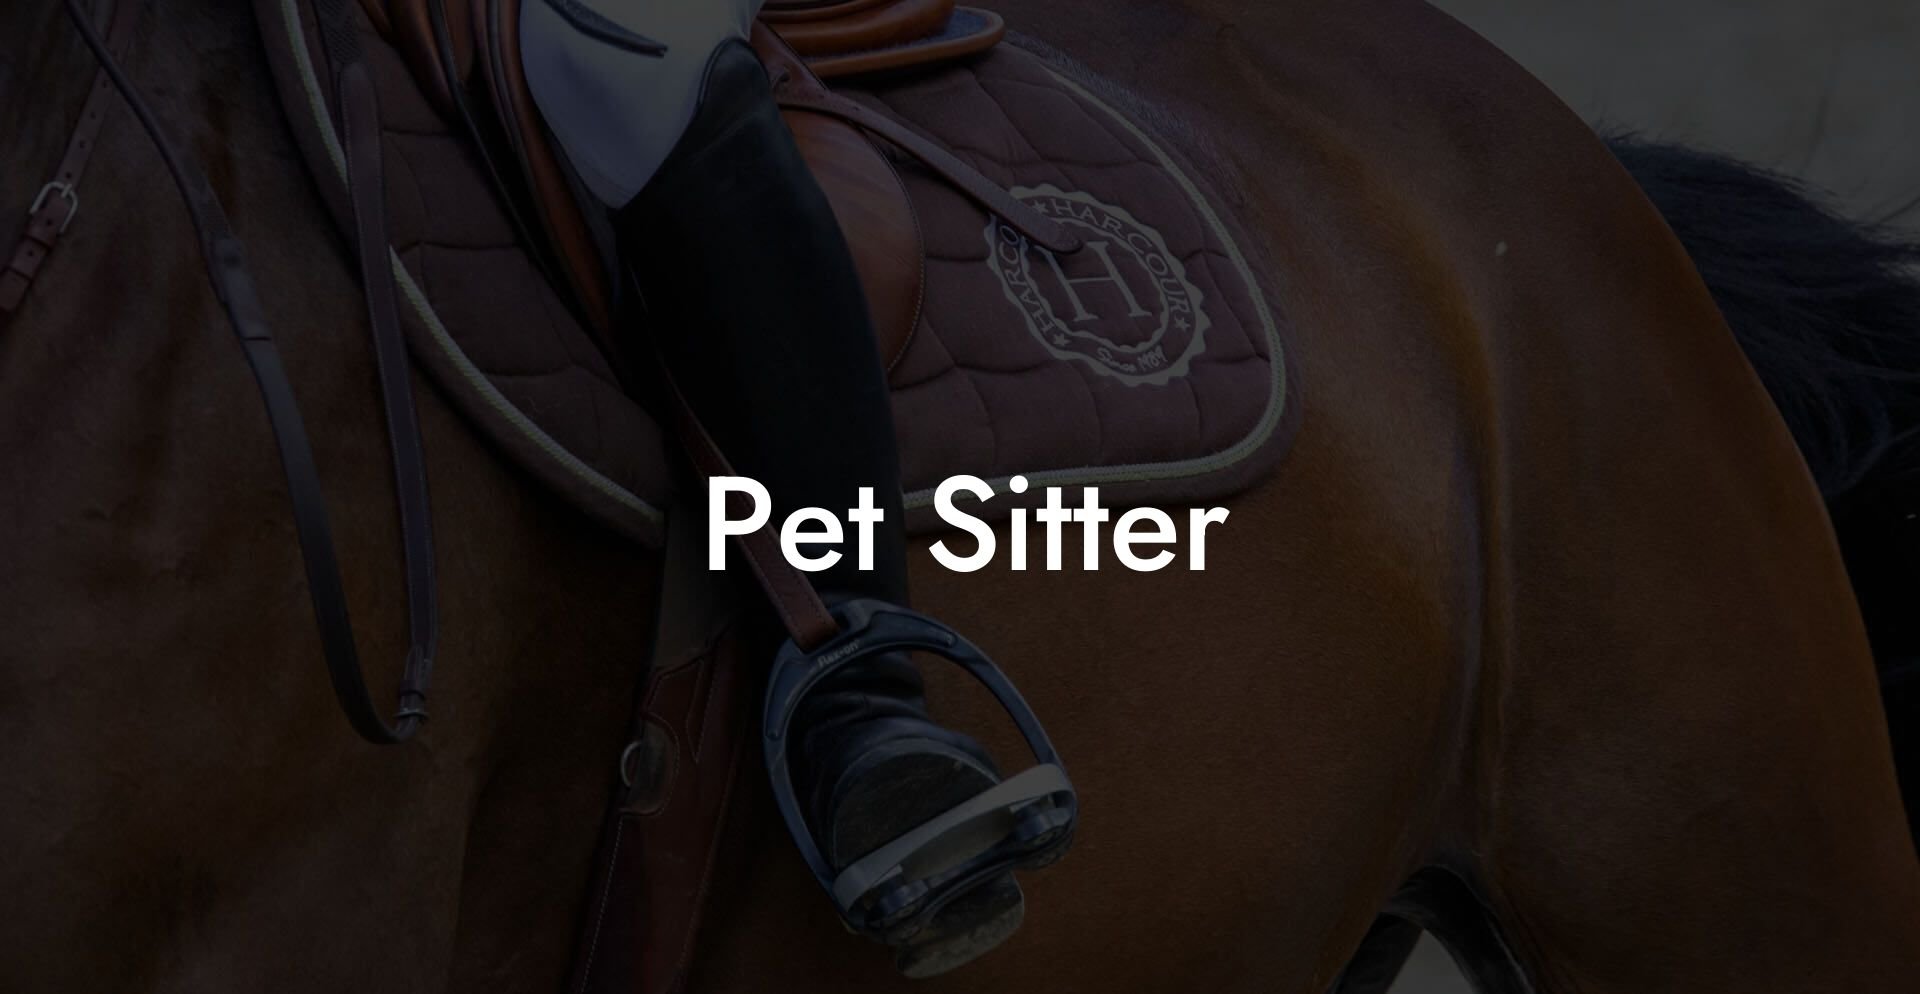 Pet Sitter